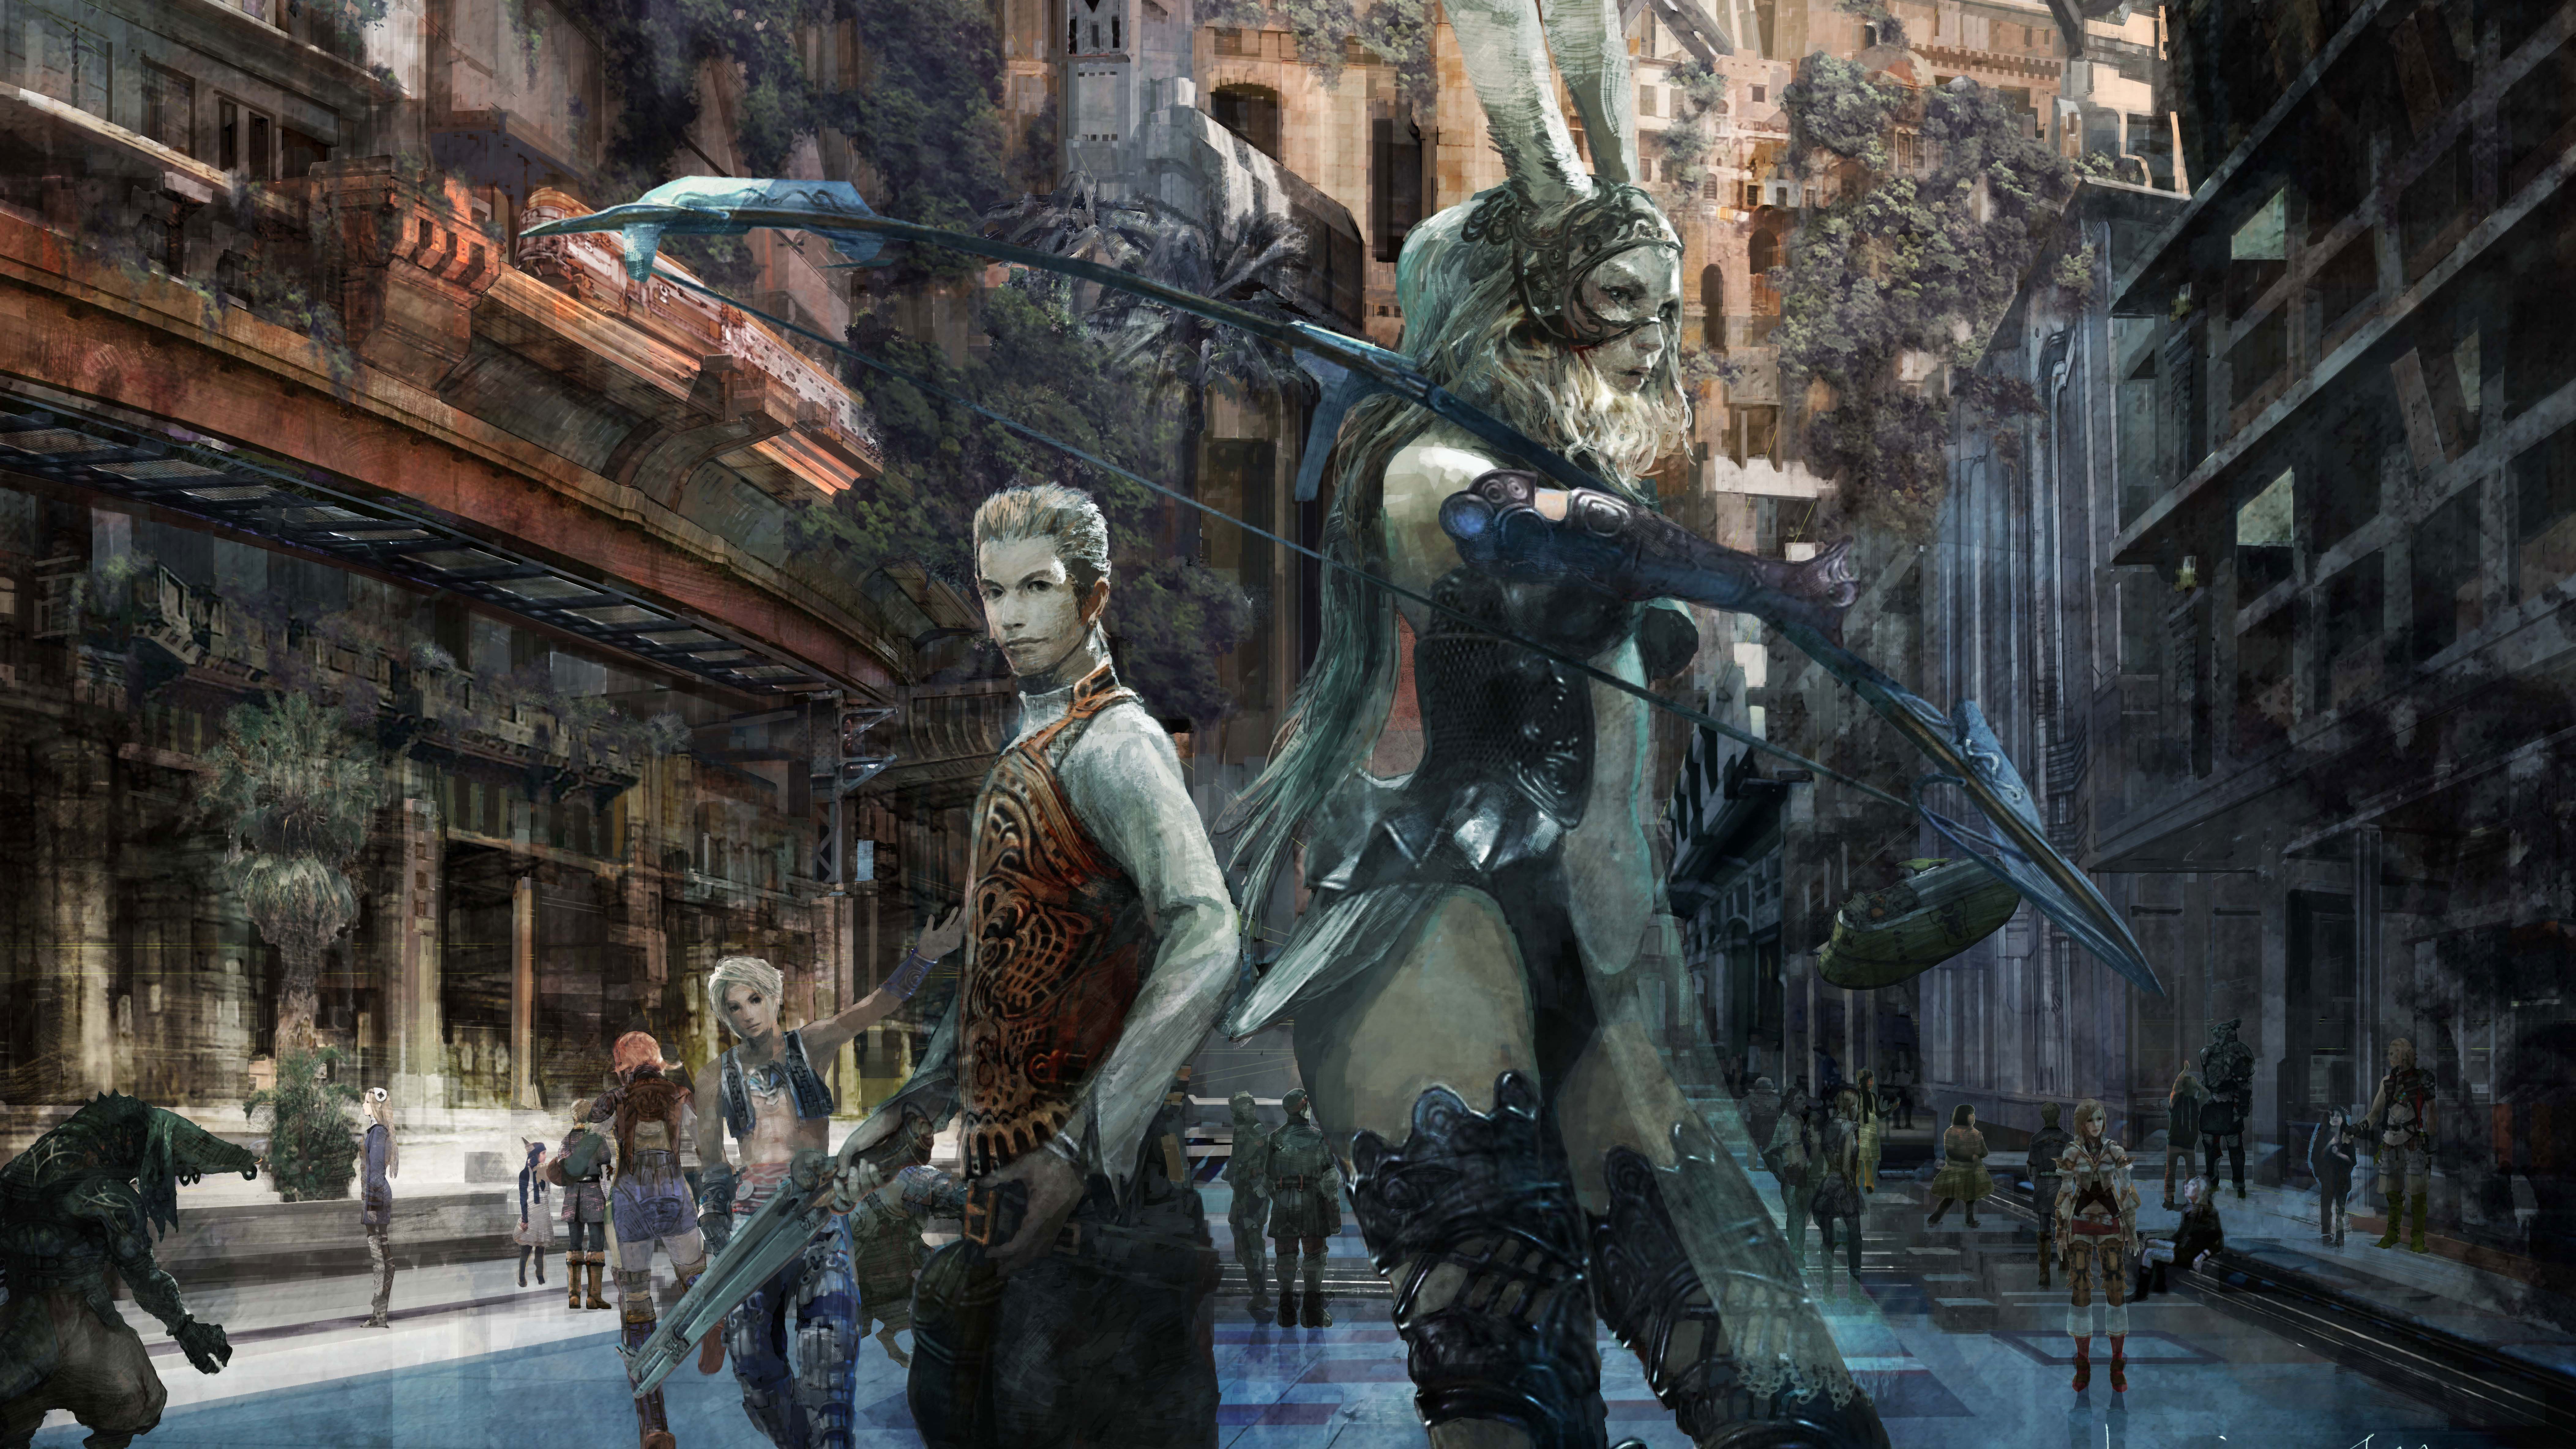 Video Game Final Fantasy XII: The Zodiac Age 8k Ultra HD Wallpaper